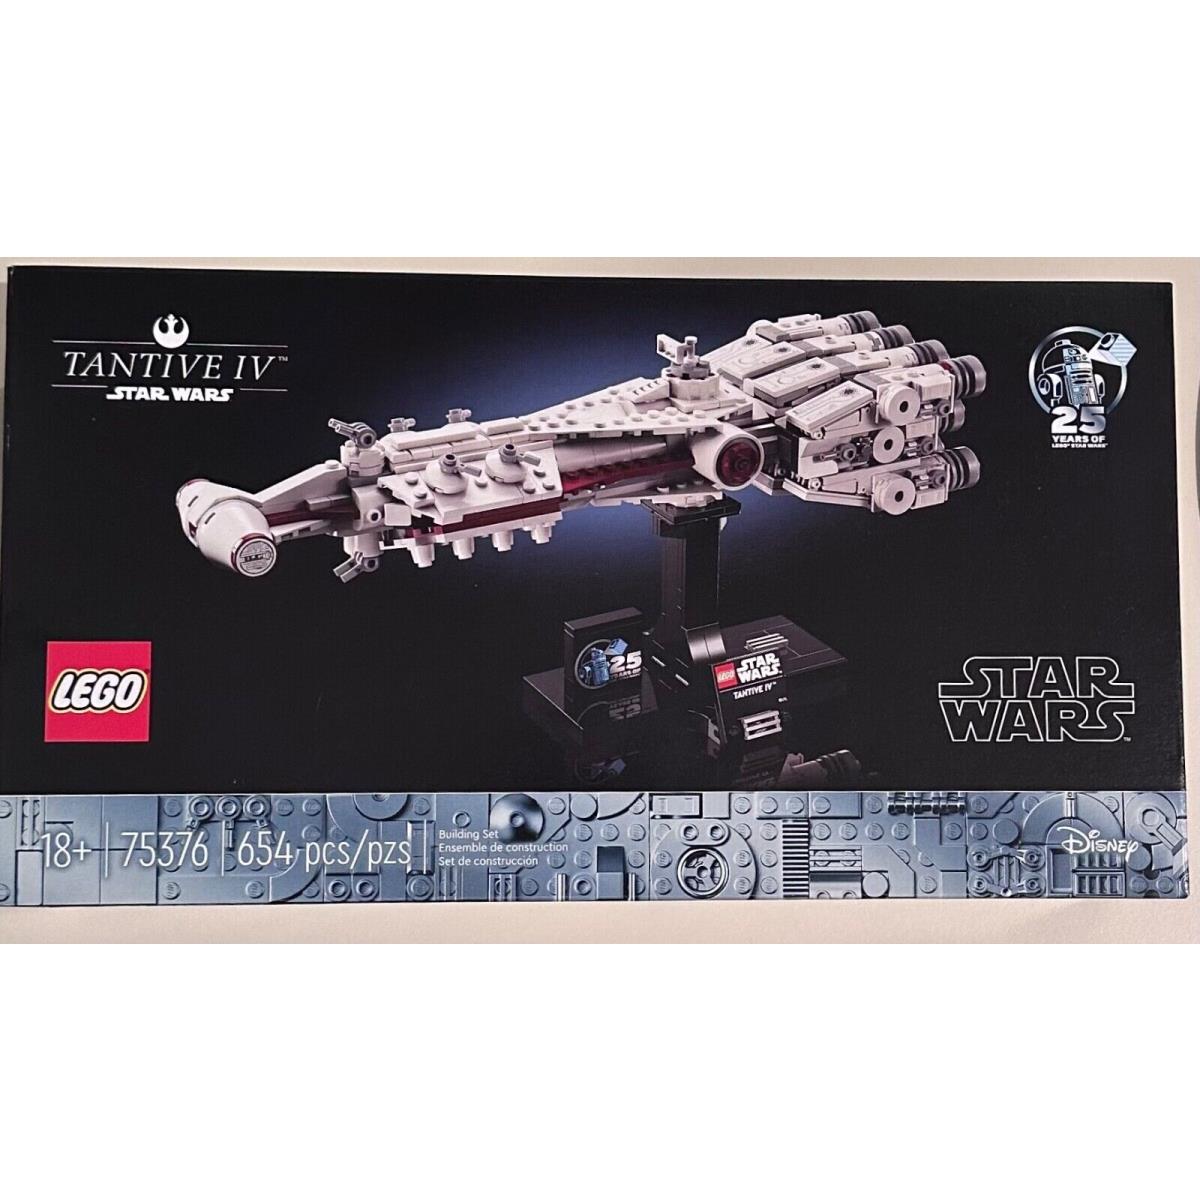 Lego Disney Star Wars Tantive IV 75376 Building Toy 654 Pieces 18+